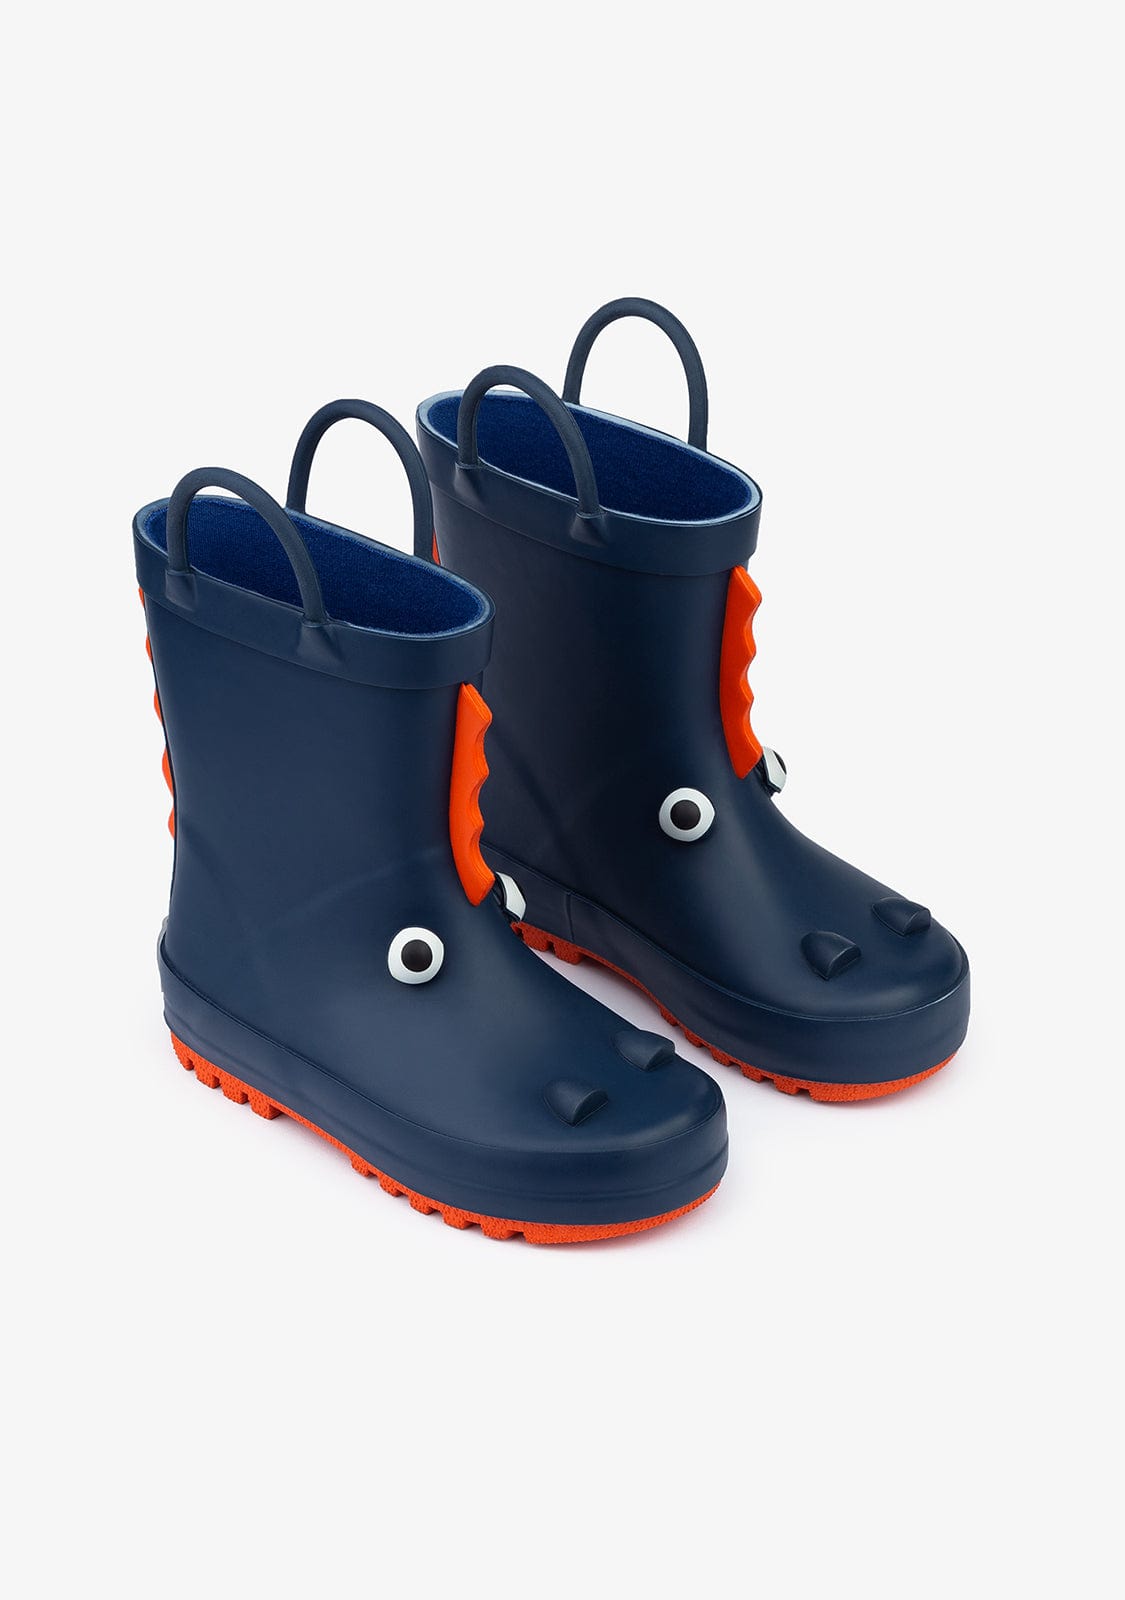 CONGUITOS Shoes Navy Dinosaur Rain Boots Rubber